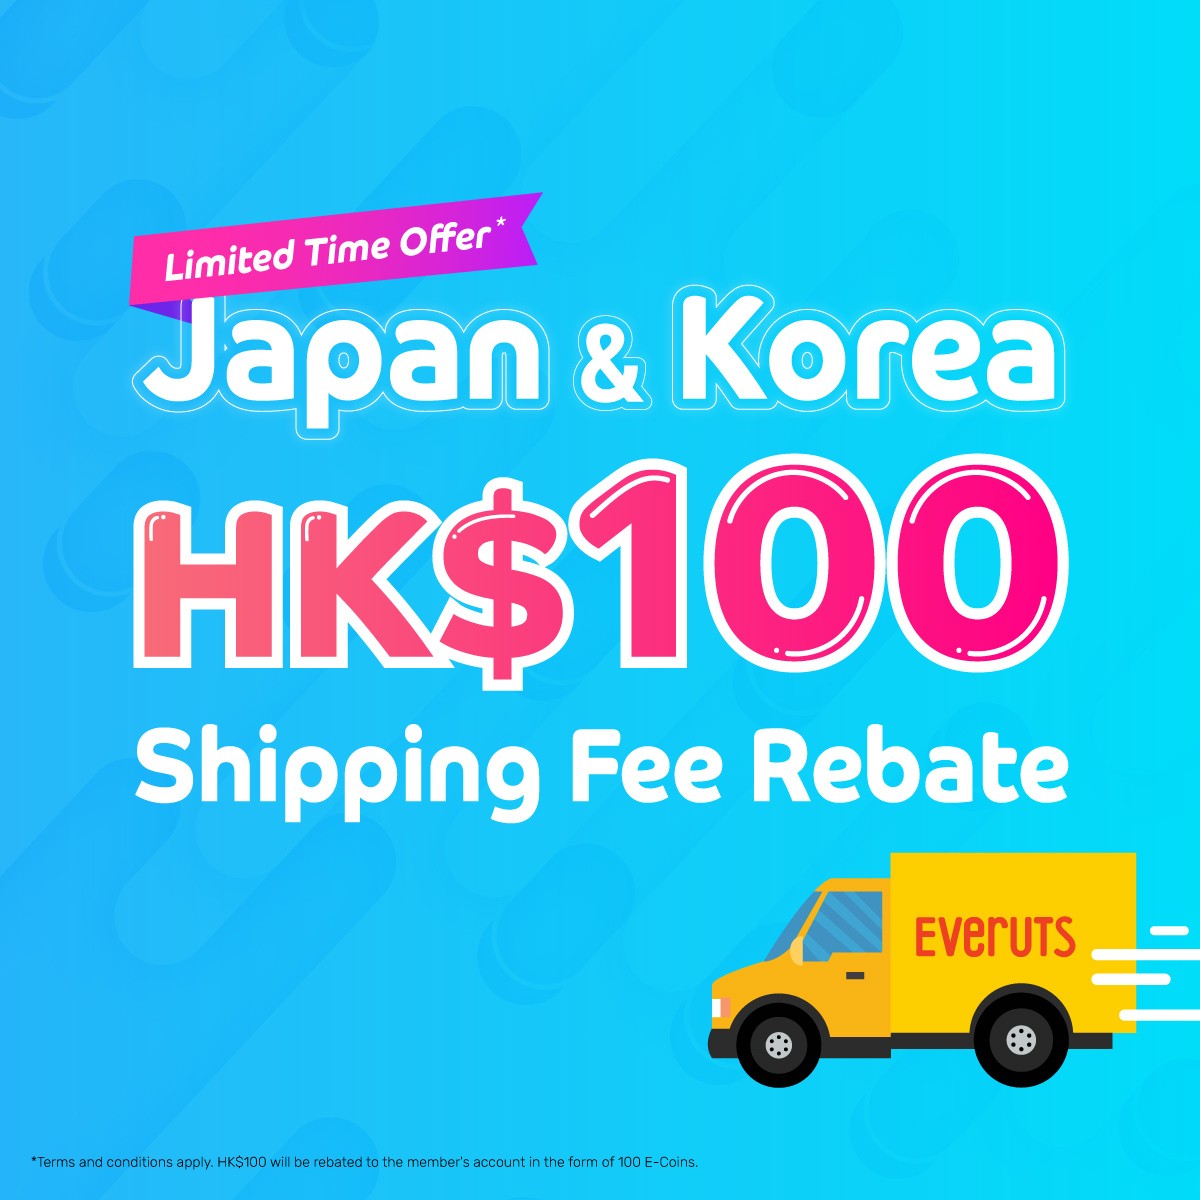 Japan & Korea HK$100 Shipping Fee Rebate